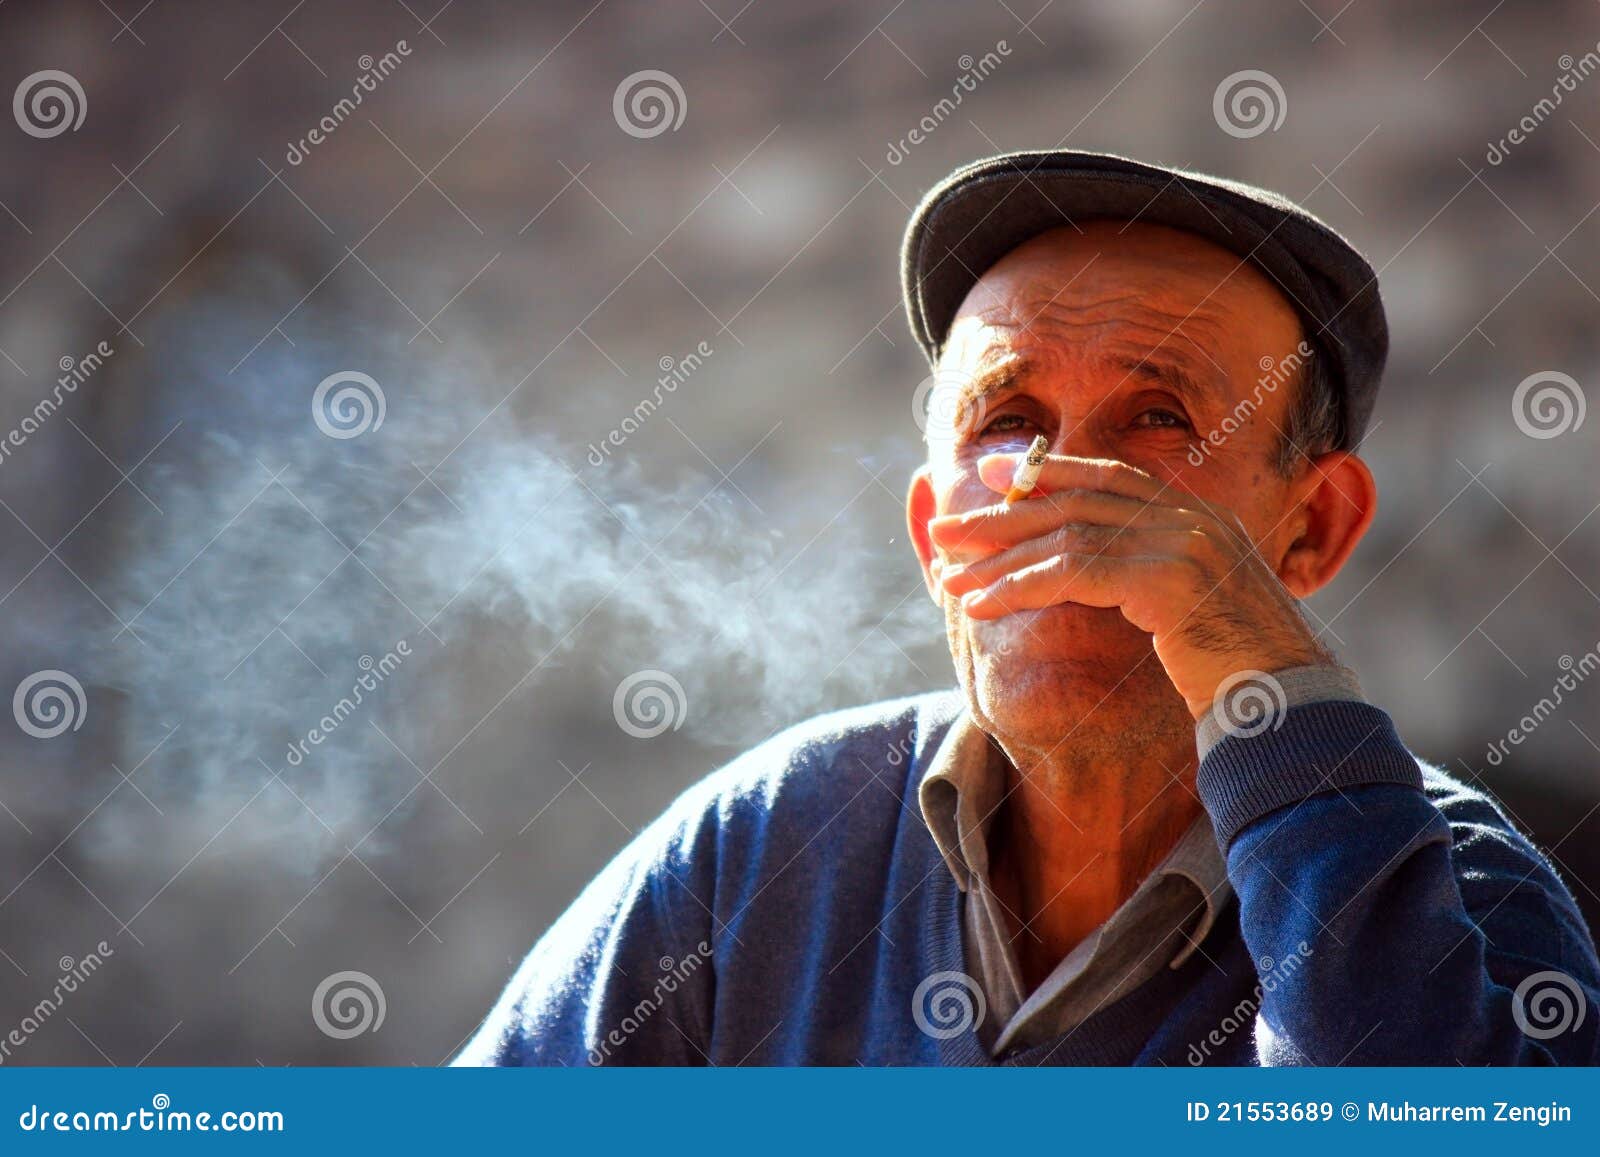 Anatolian-Turkish Man editorial stock image. Image of emotion - 21553689